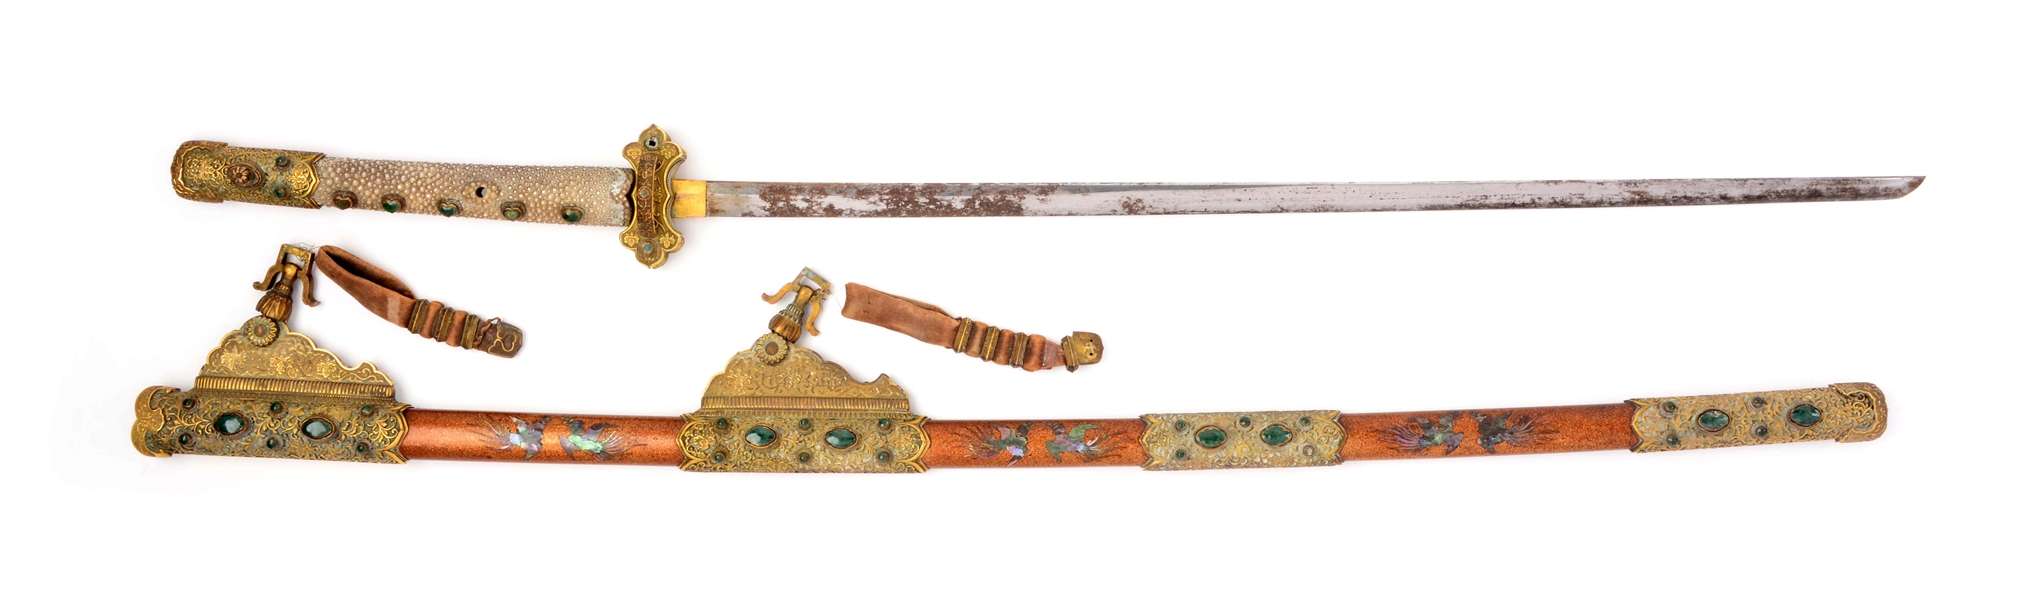 19TH CENTURY JAPANESE PRESENTATION SWORD.